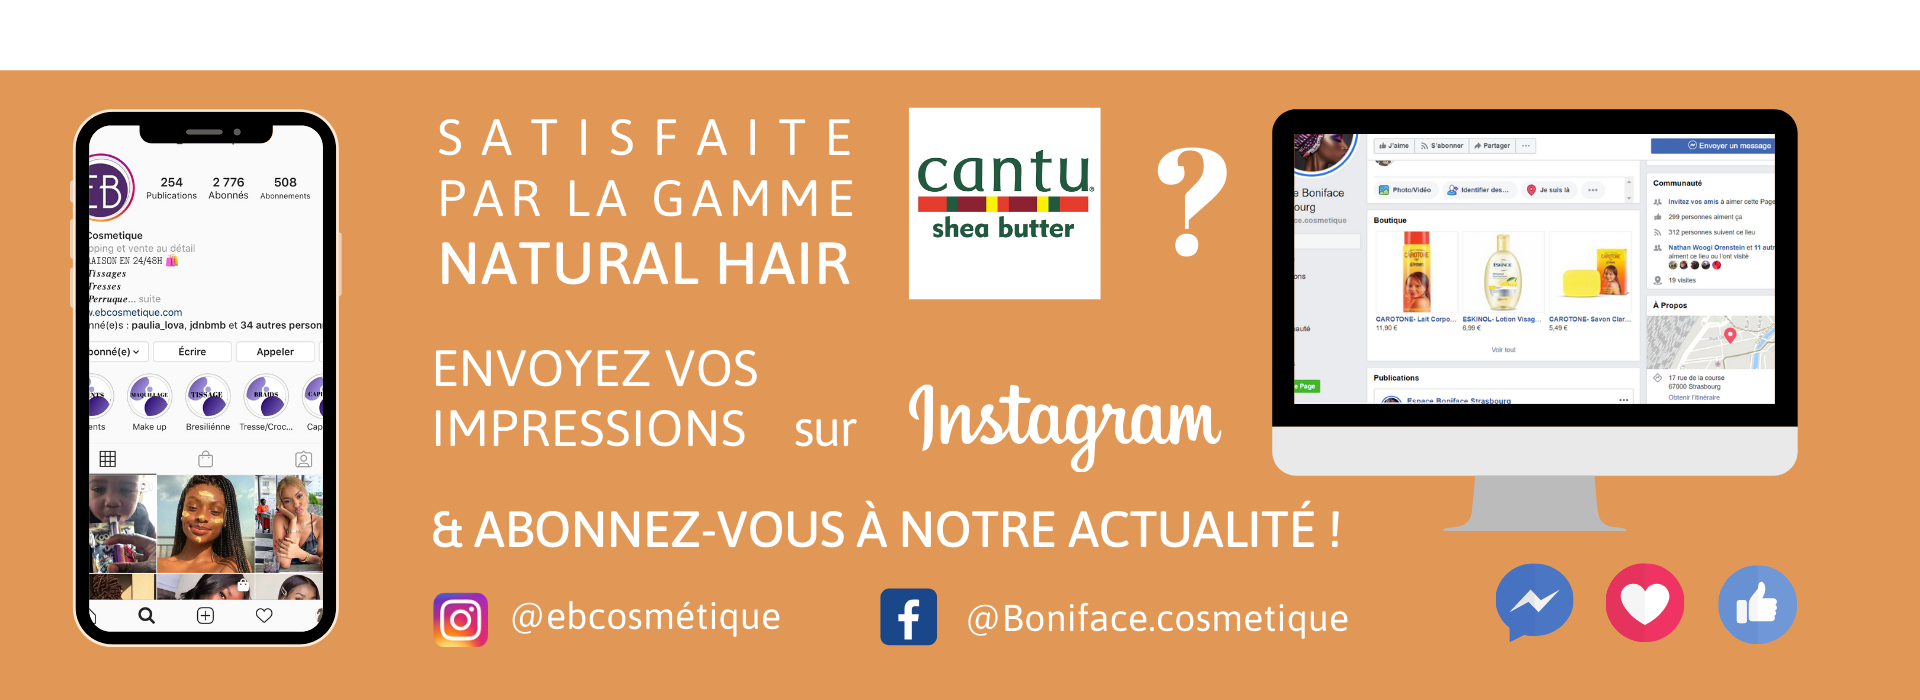 fiche produit ebcosmetique cantu shea butter natural hair MOISTURIZING TWIST & LOCK GEL routine capillaire afro bouclé facebook instagram